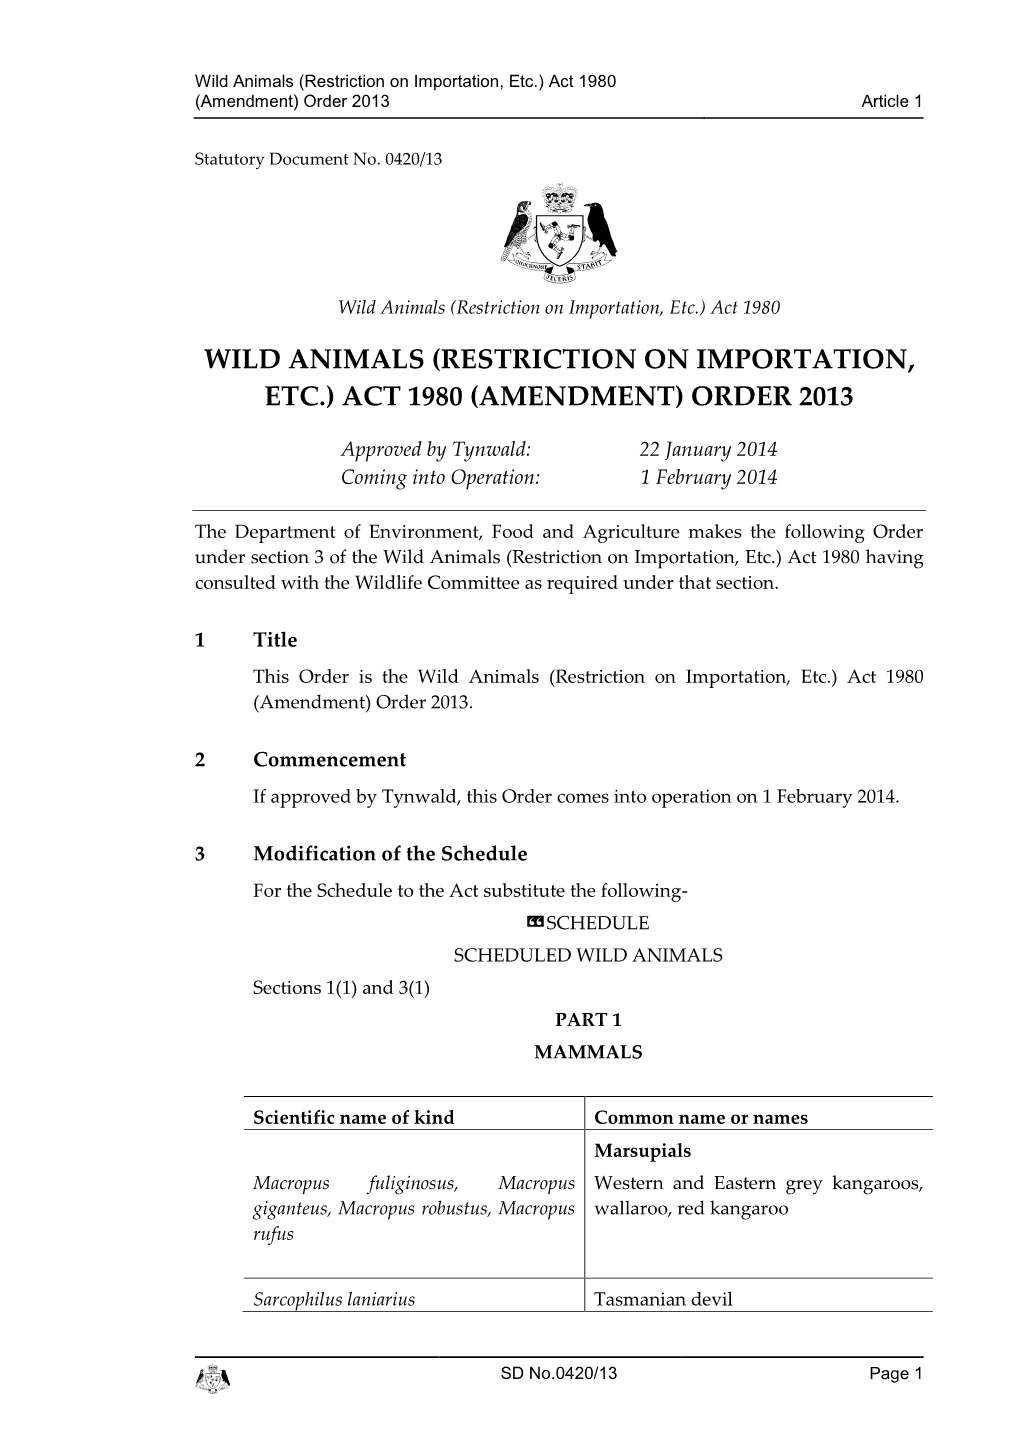 Wild Animals (Restriction on Importation, Etc.) Act 1980 (Amendment) Order 2013 Article 1